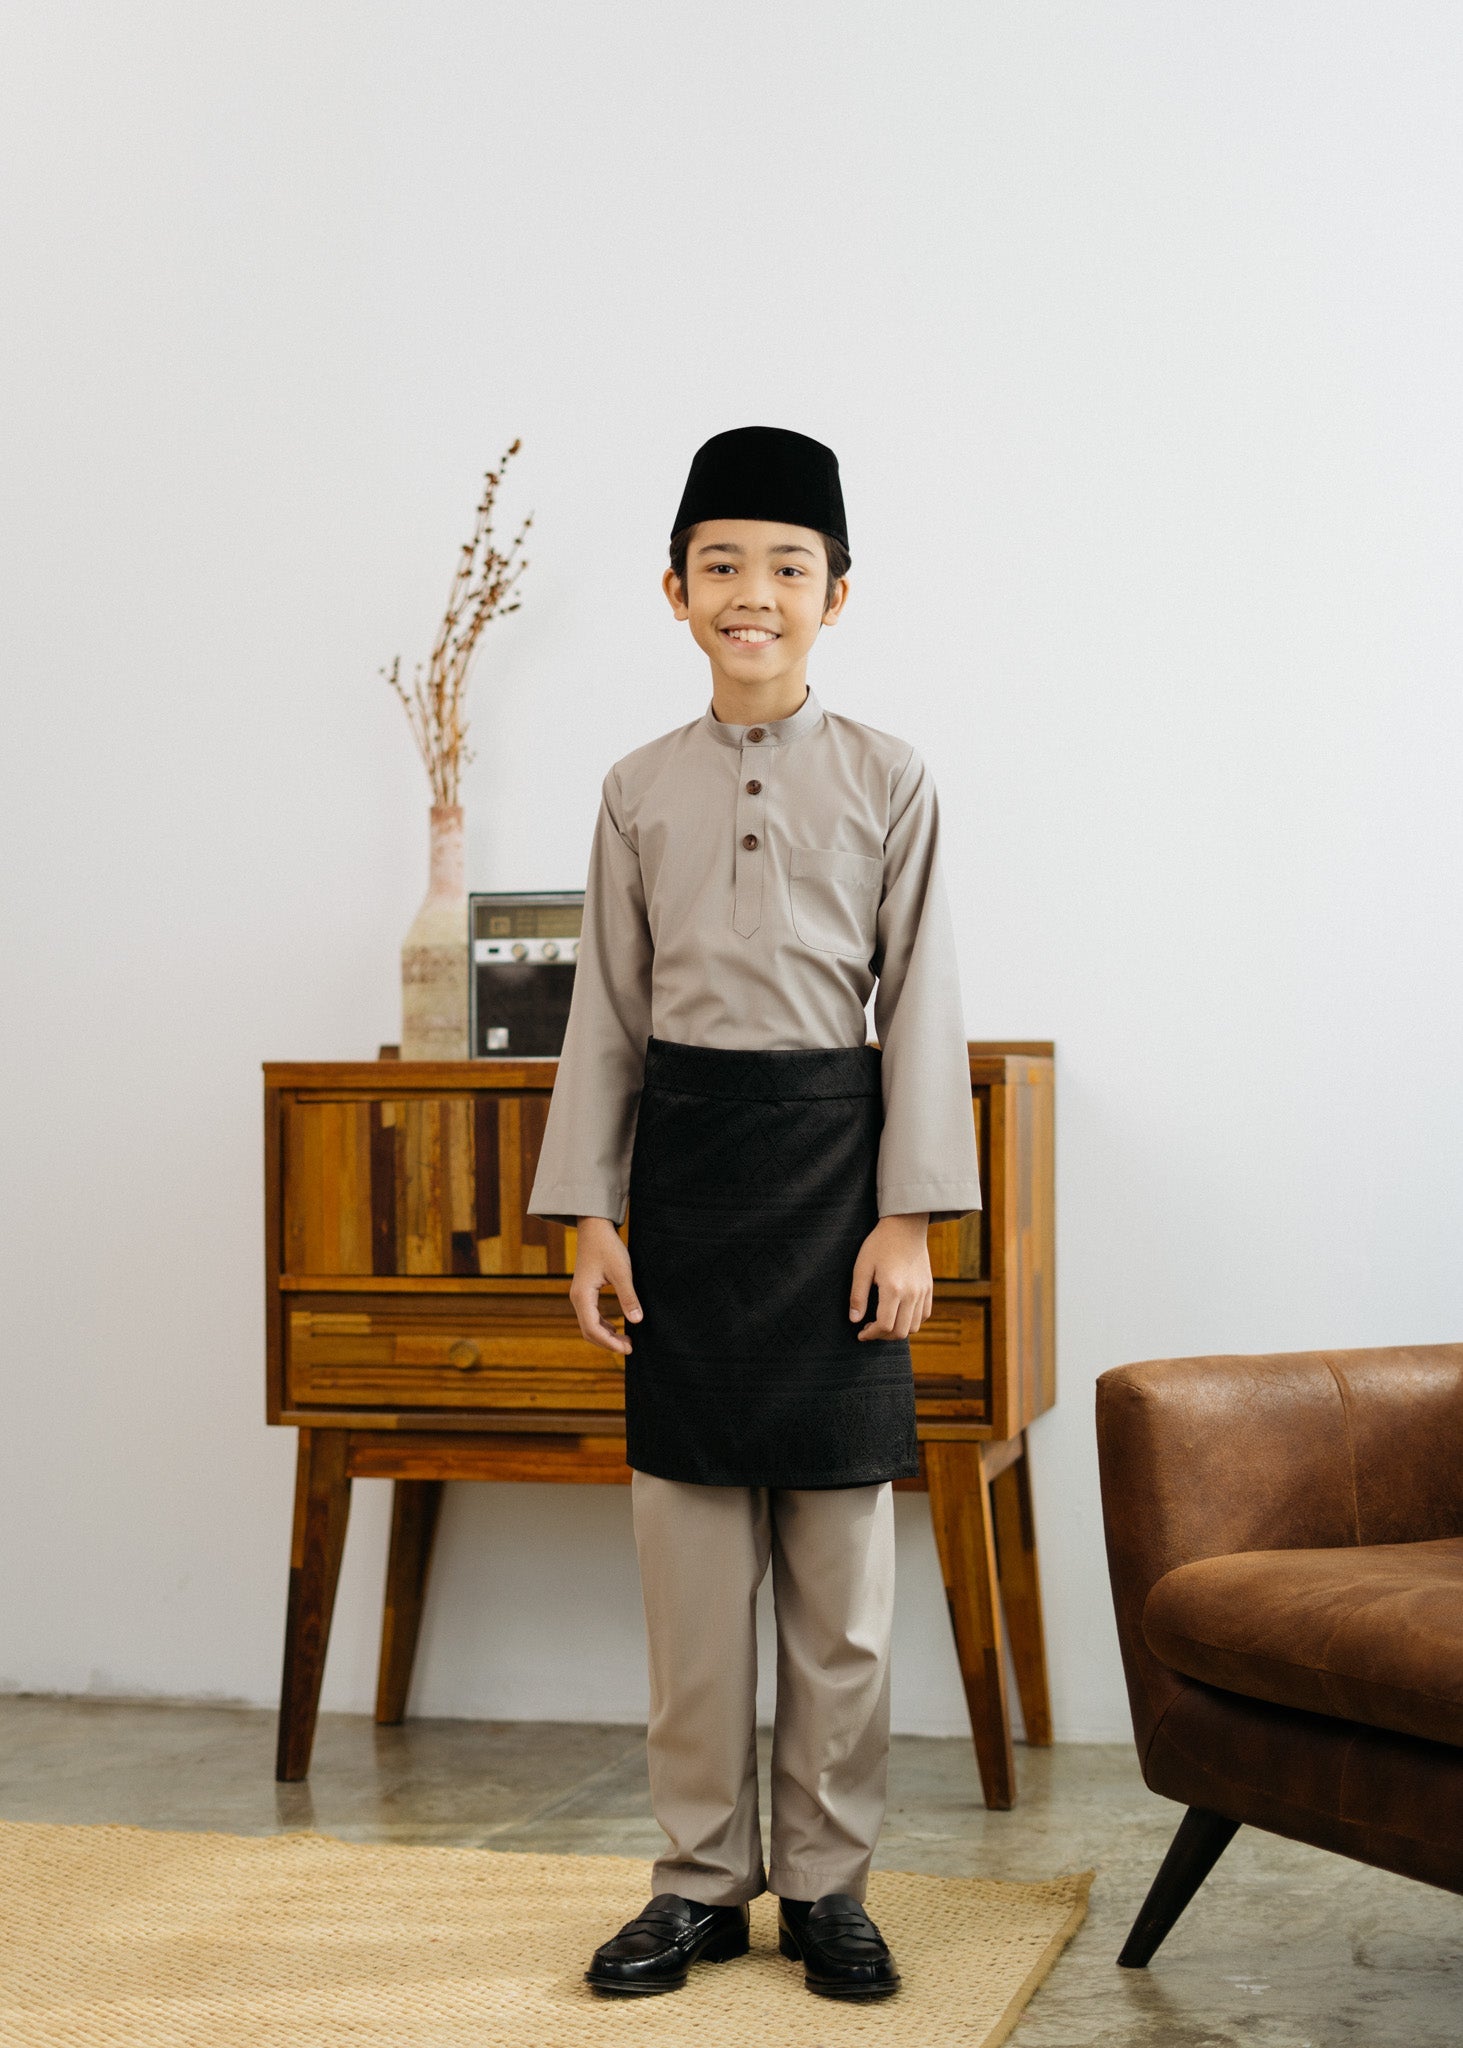 Patawali Boys Baju Melayu Cekak Musang - Coin Grey